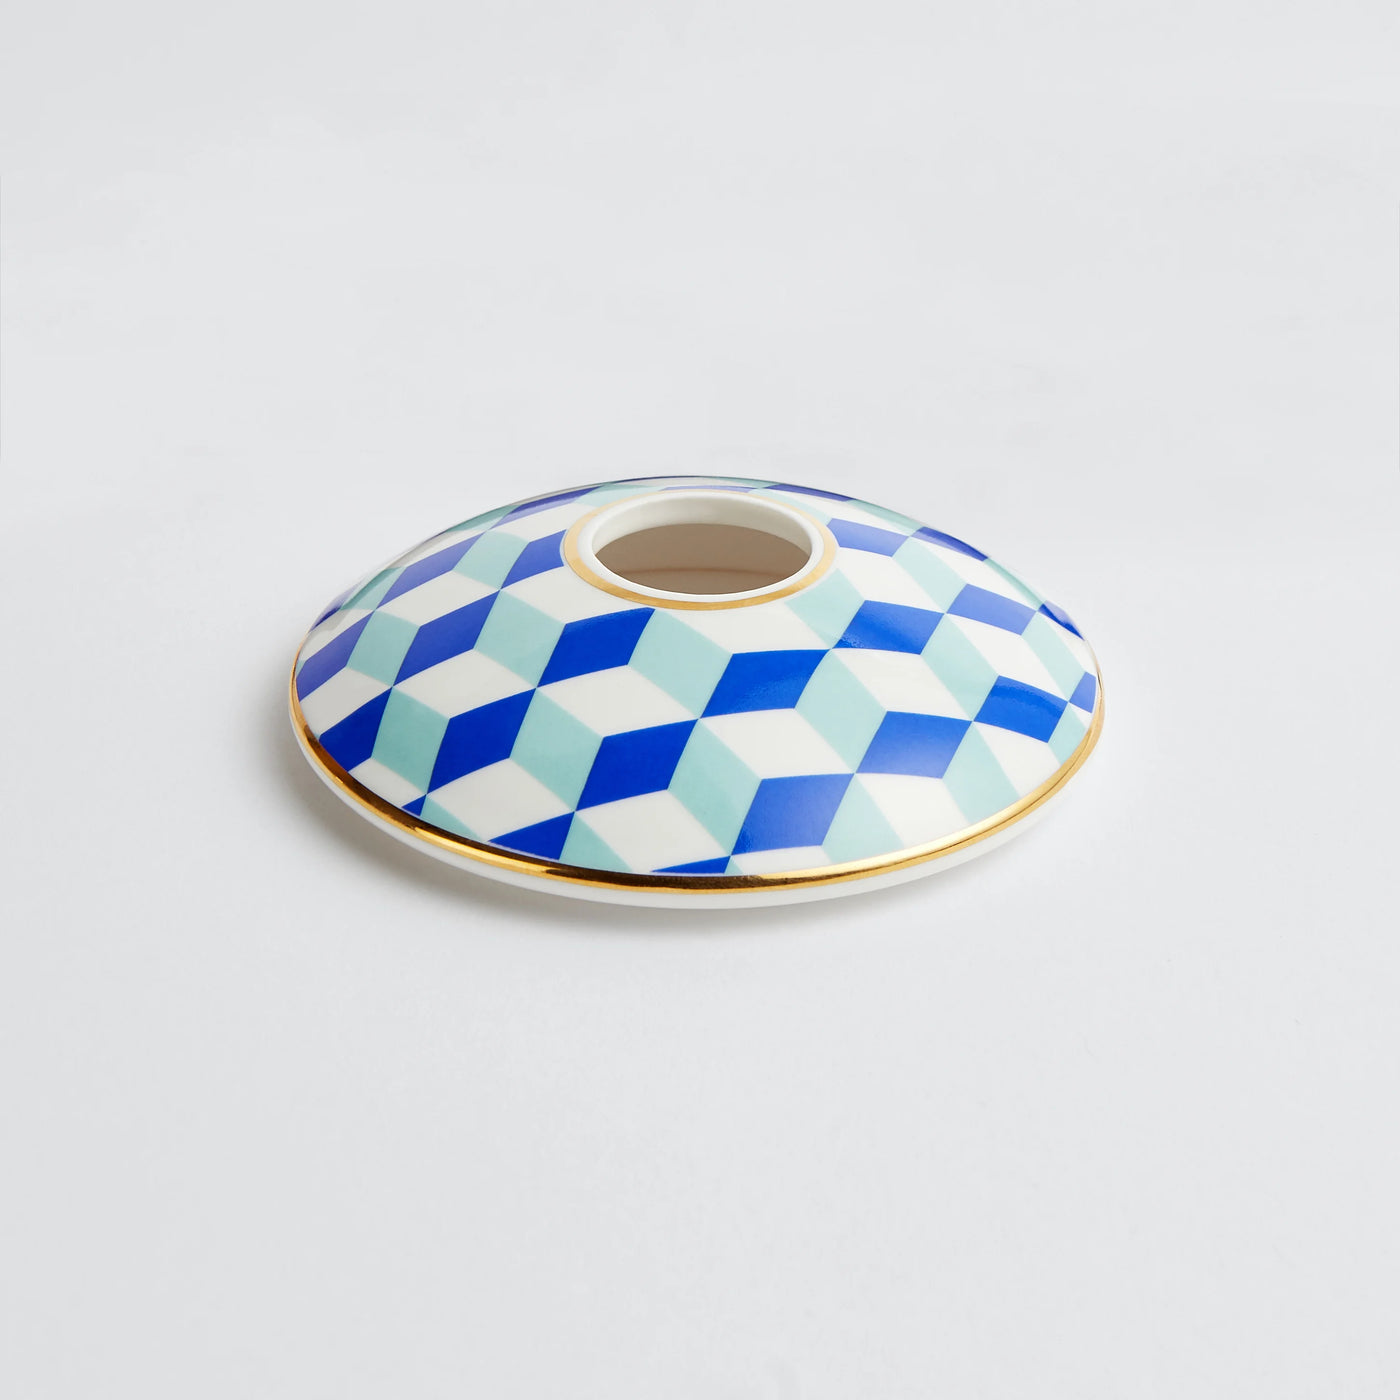 Maison Splendid fine bone china diffuser lid in blue geometric design